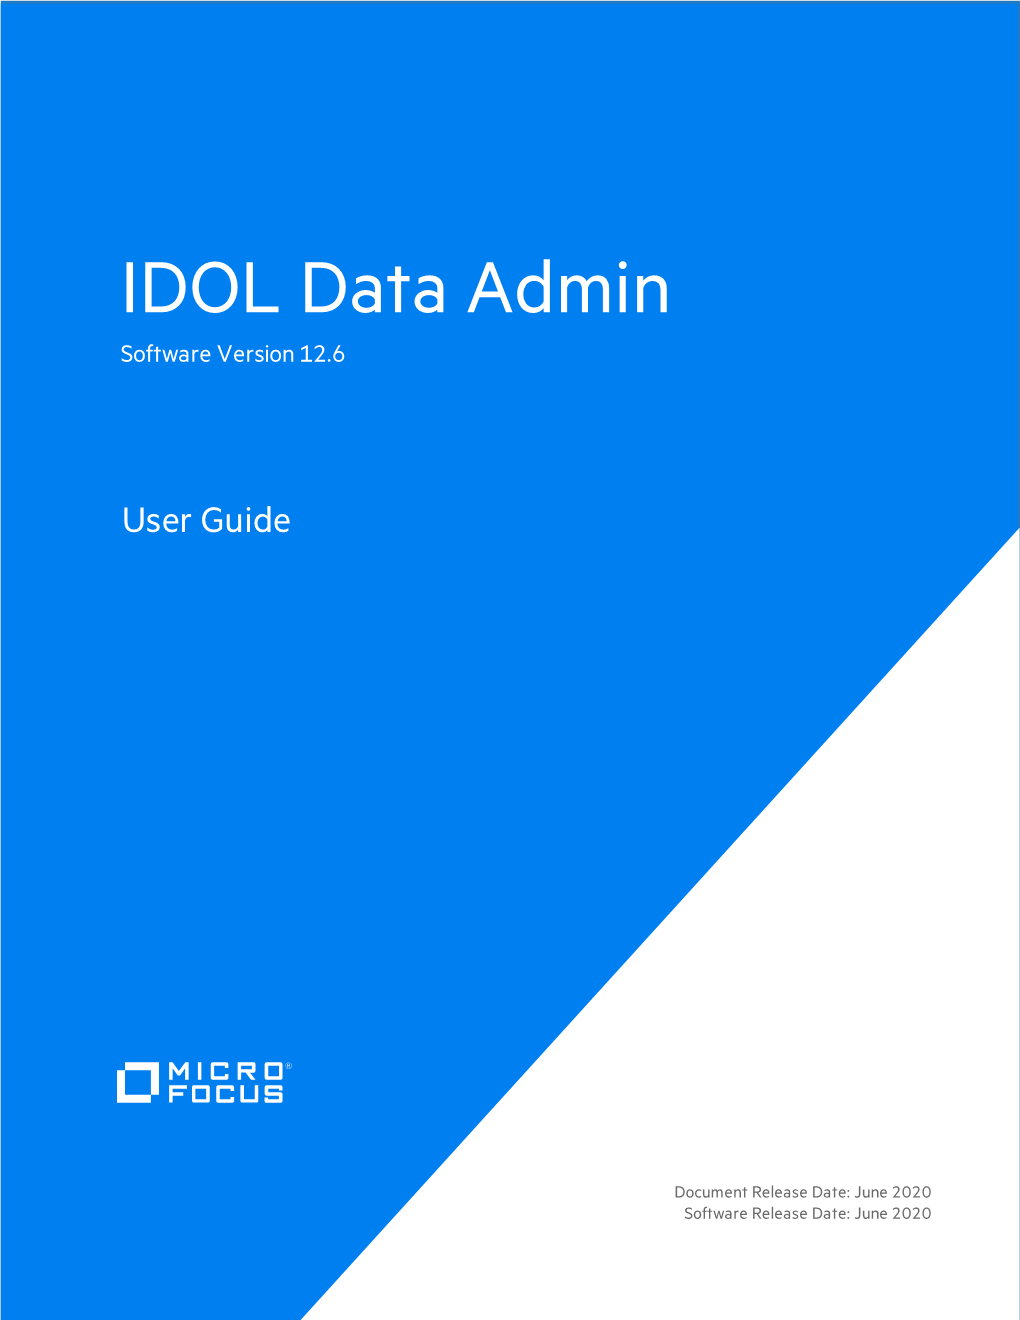 IDOL Data Admin 12.6 User Guide